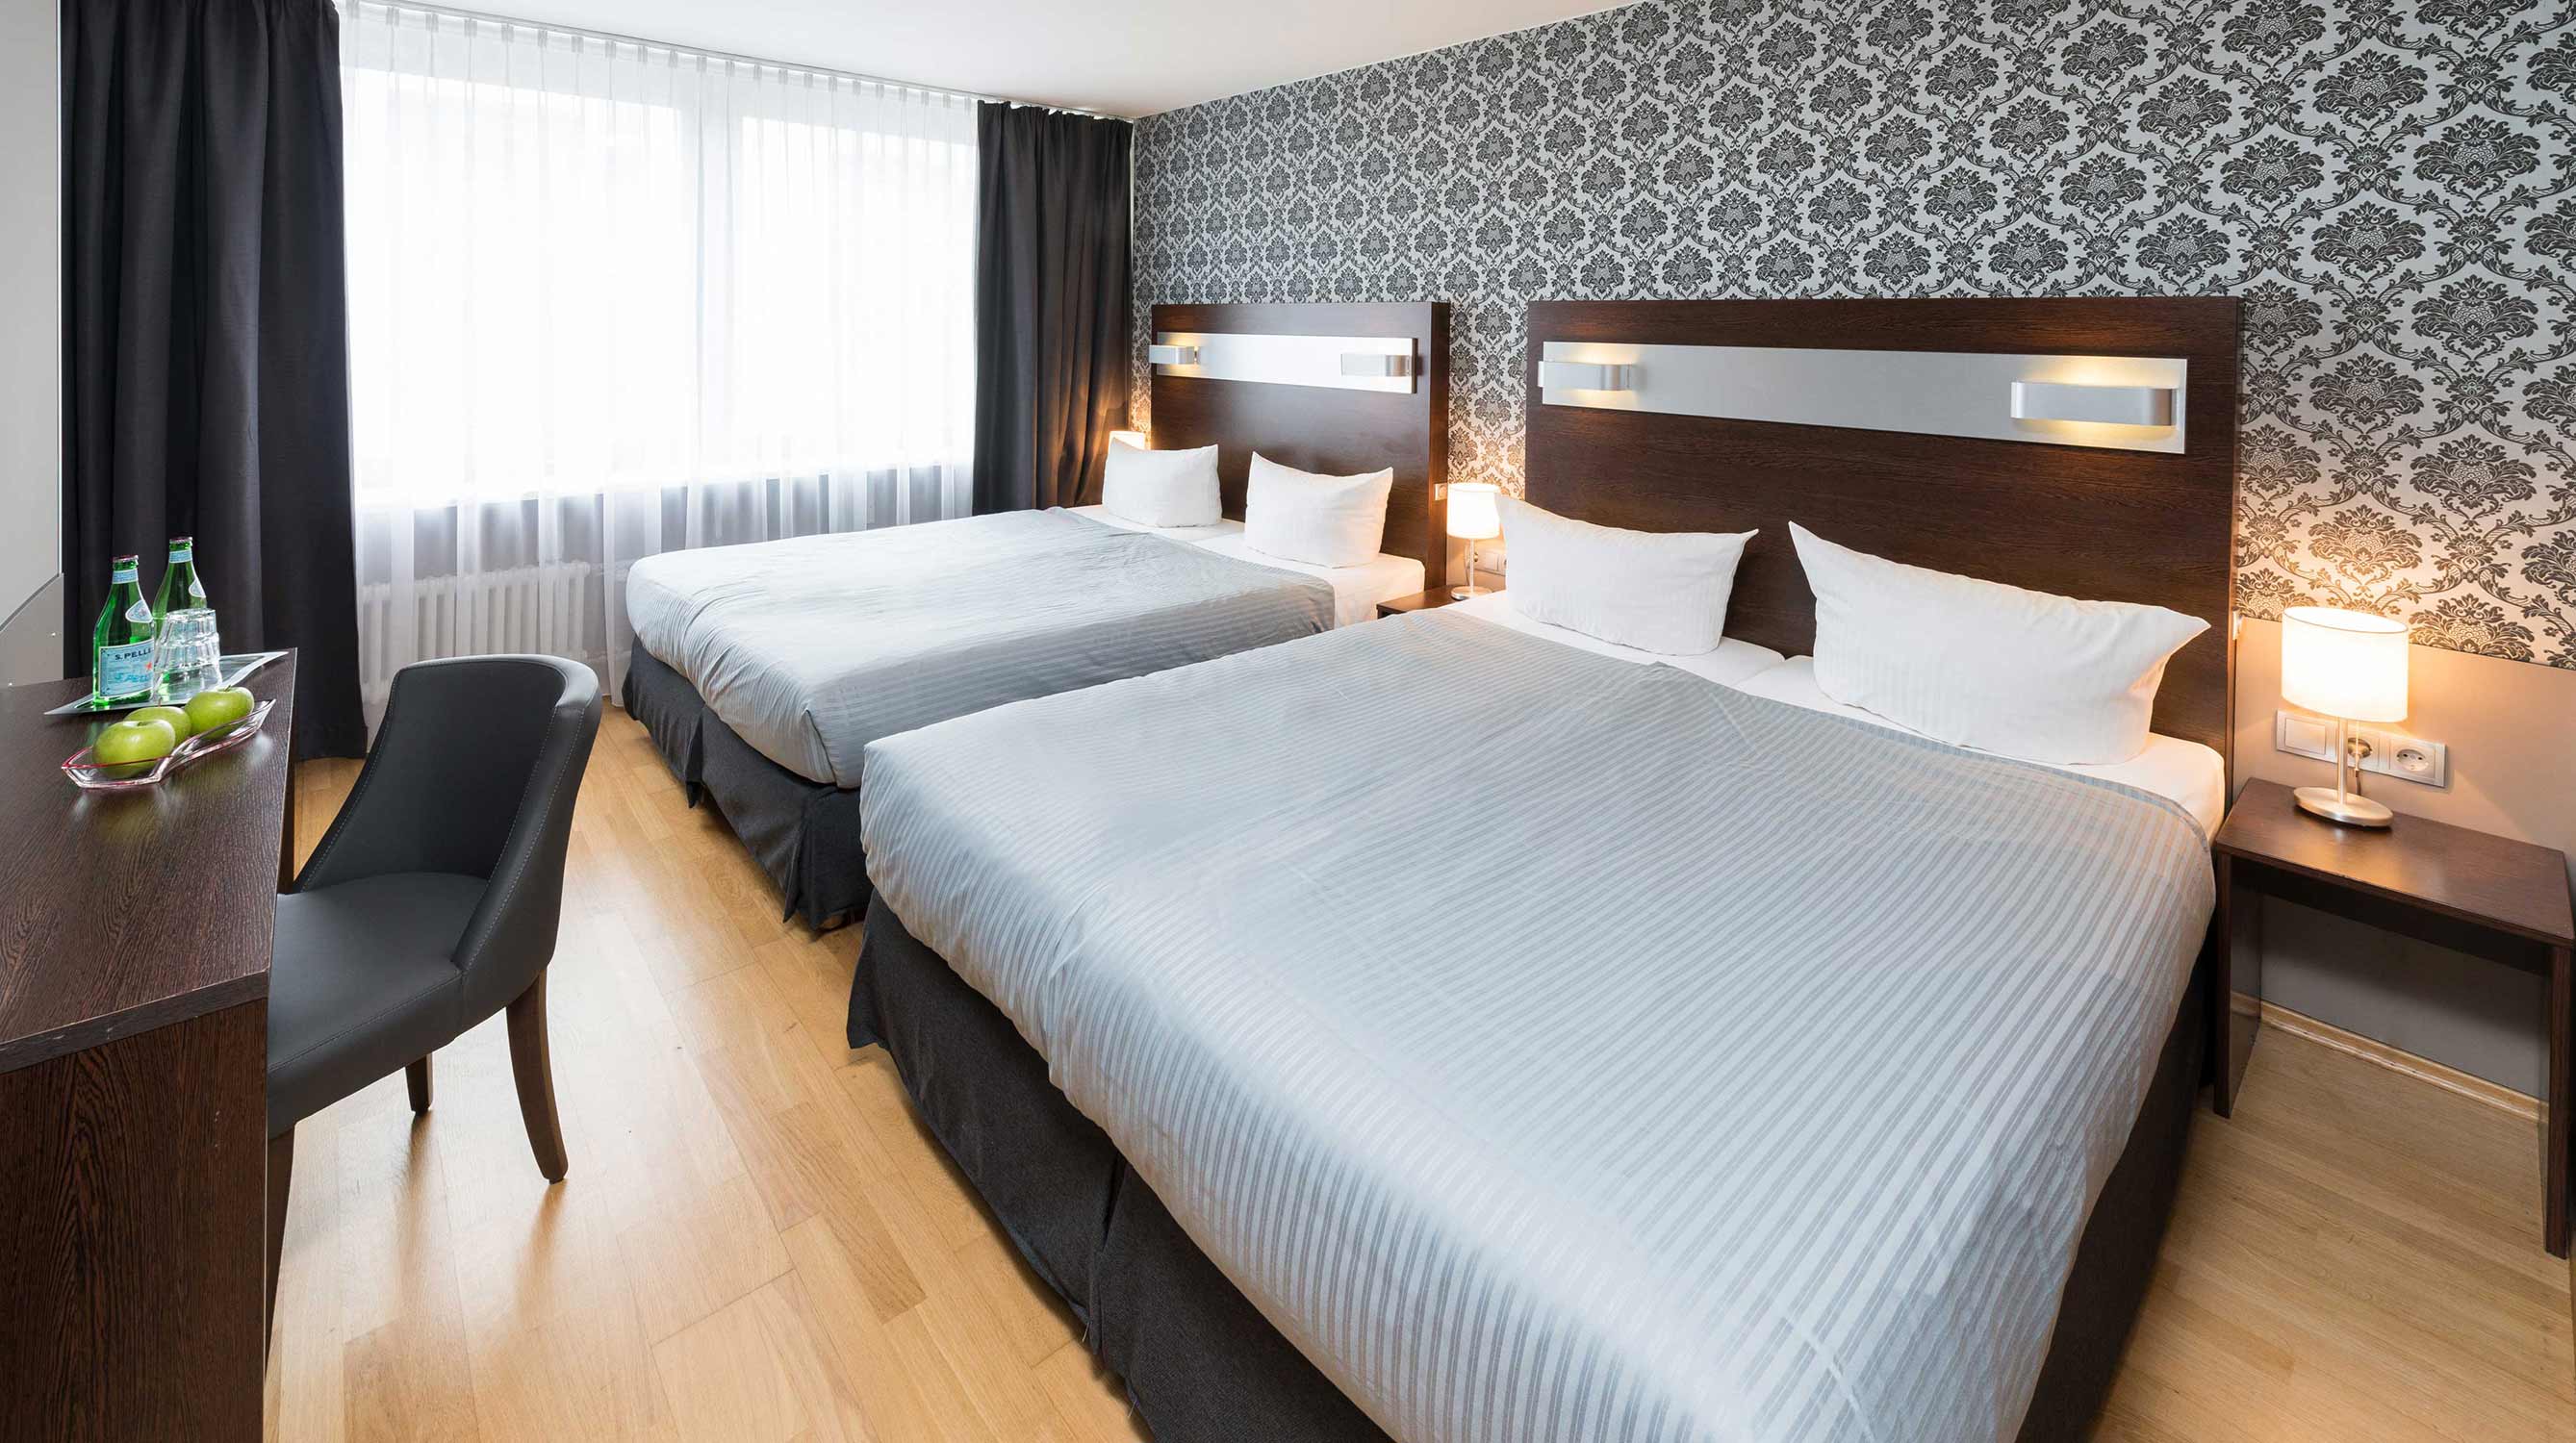 Munich Inn Design Hotel vue chambre quadruple / Chambre de famille